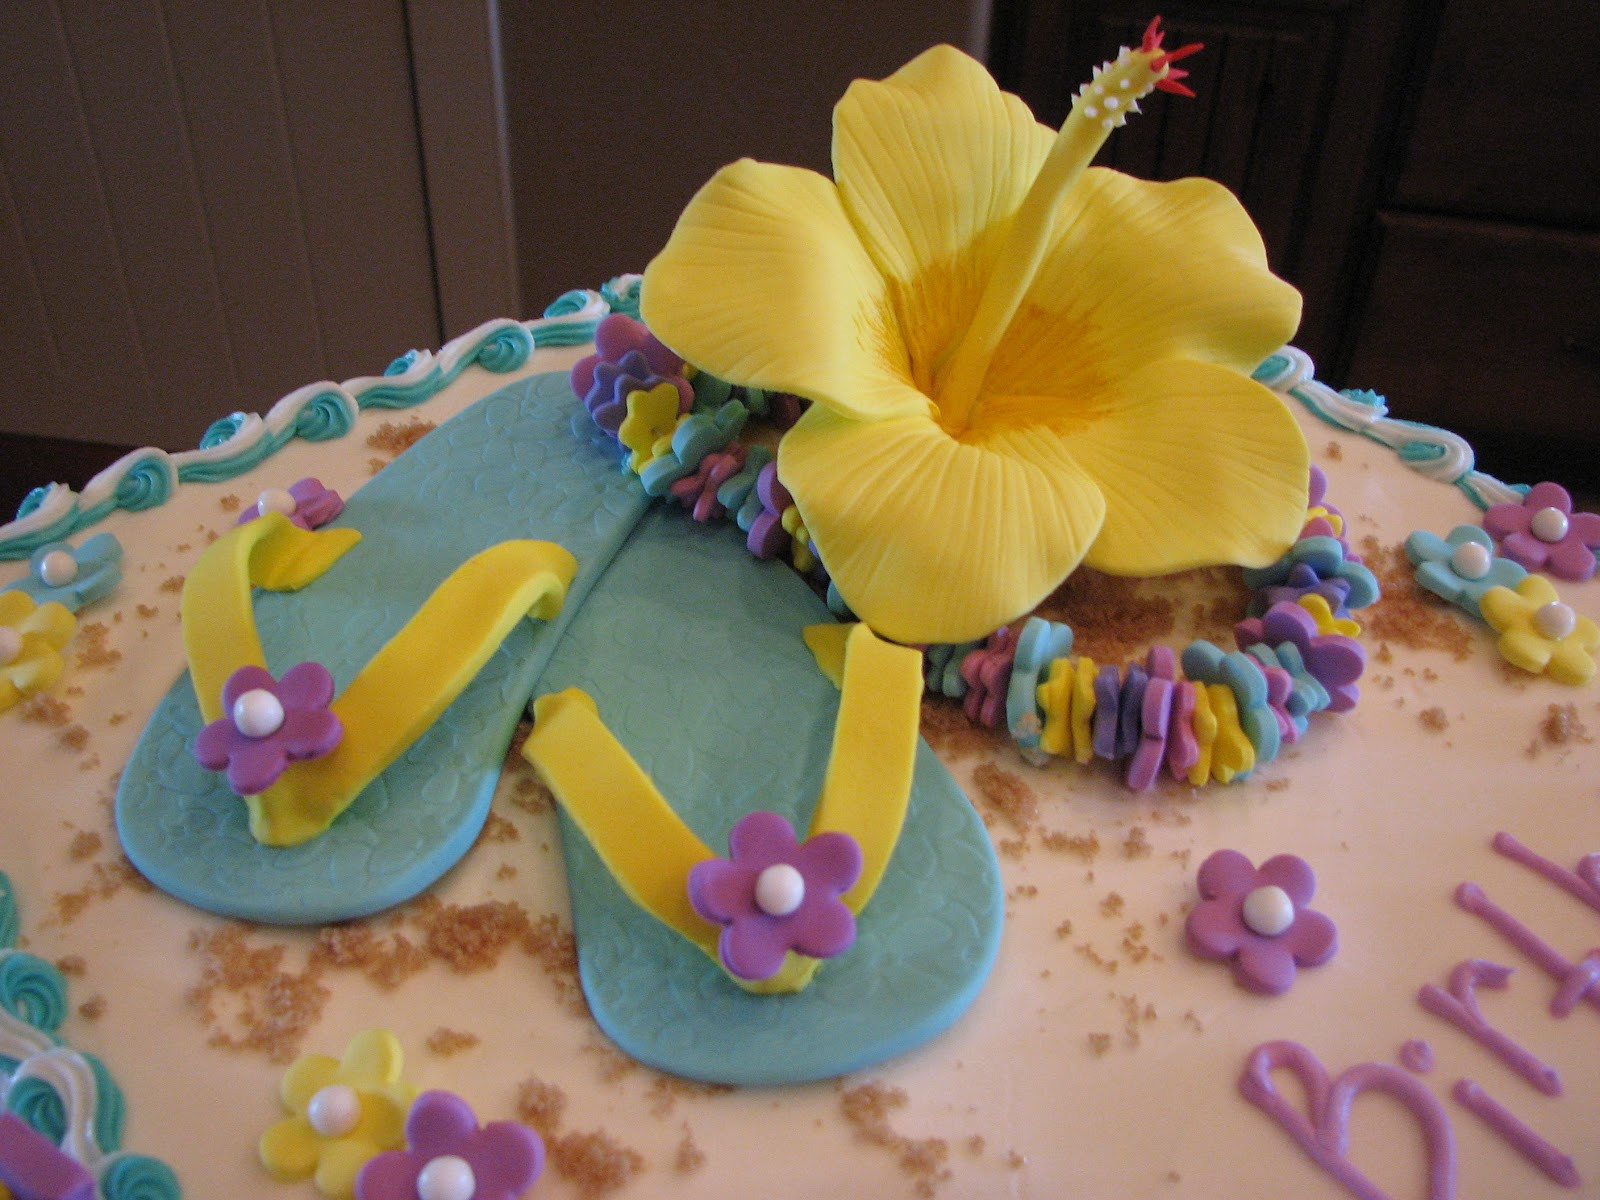 Best ideas about Hawaiian Birthday Cake
. Save or Pin Decadent Designs Hawaiian Birthday Cake Now.